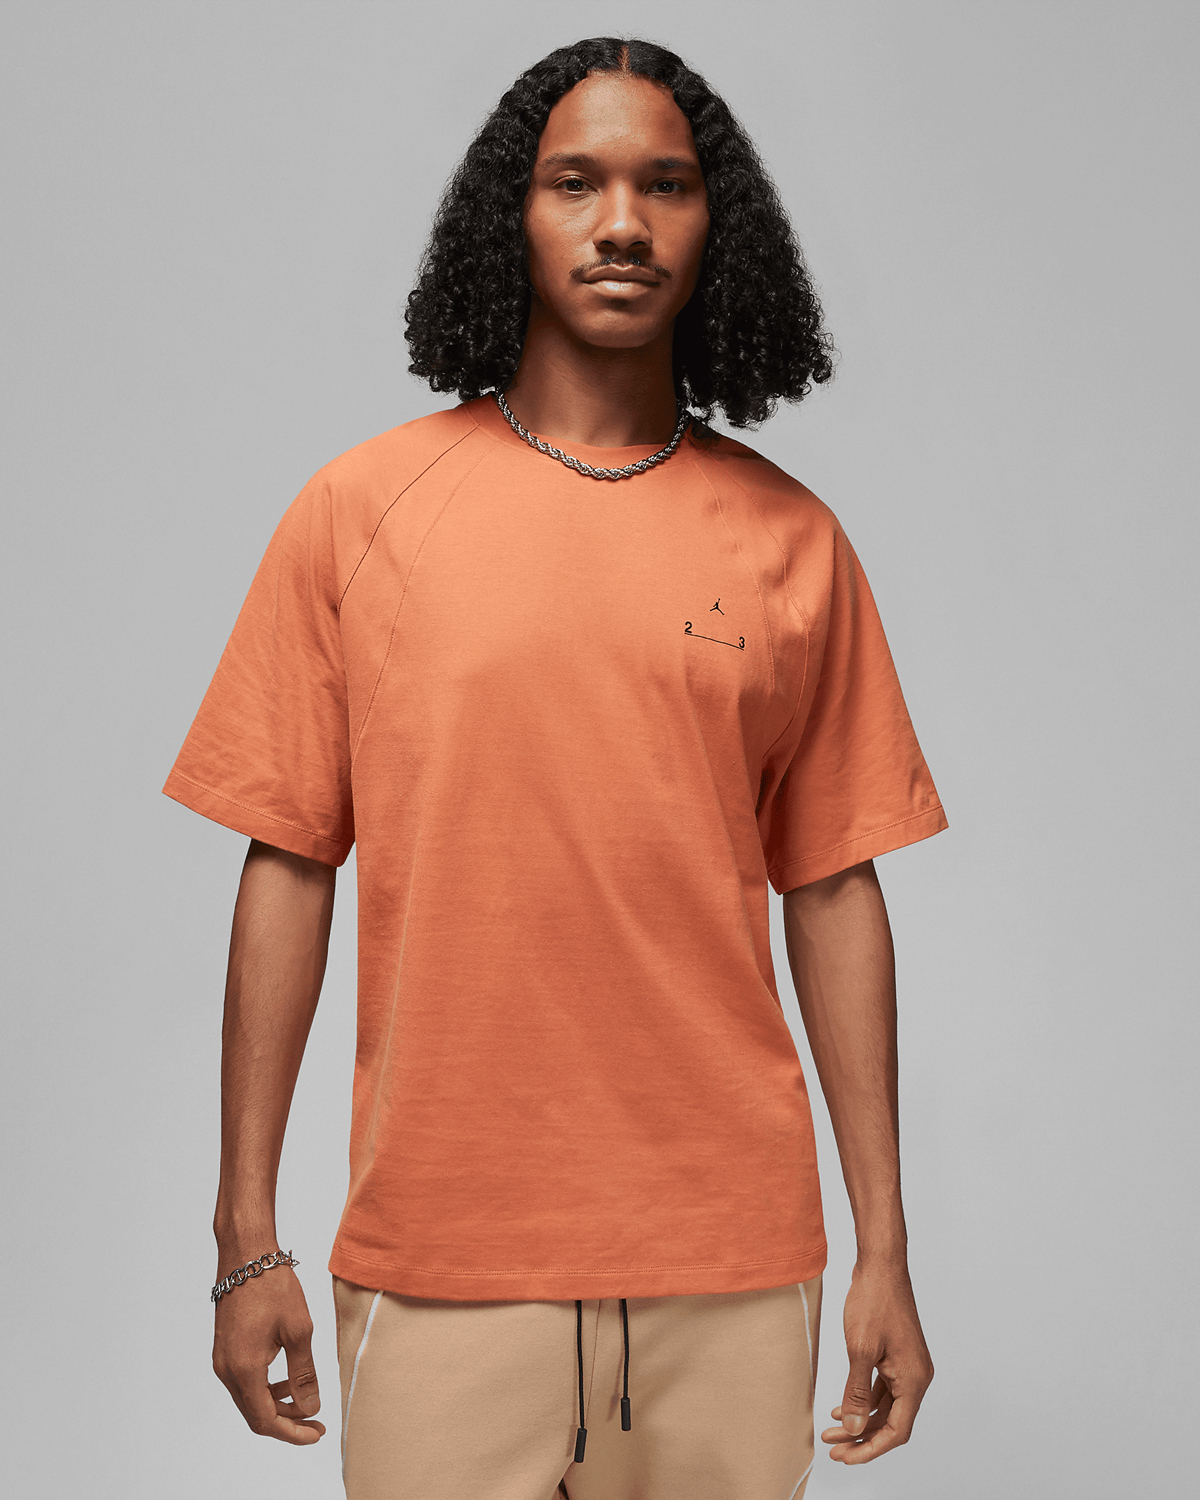 Jordan-23-Engineered-T-Shirt-Rust-Oxide-Orange